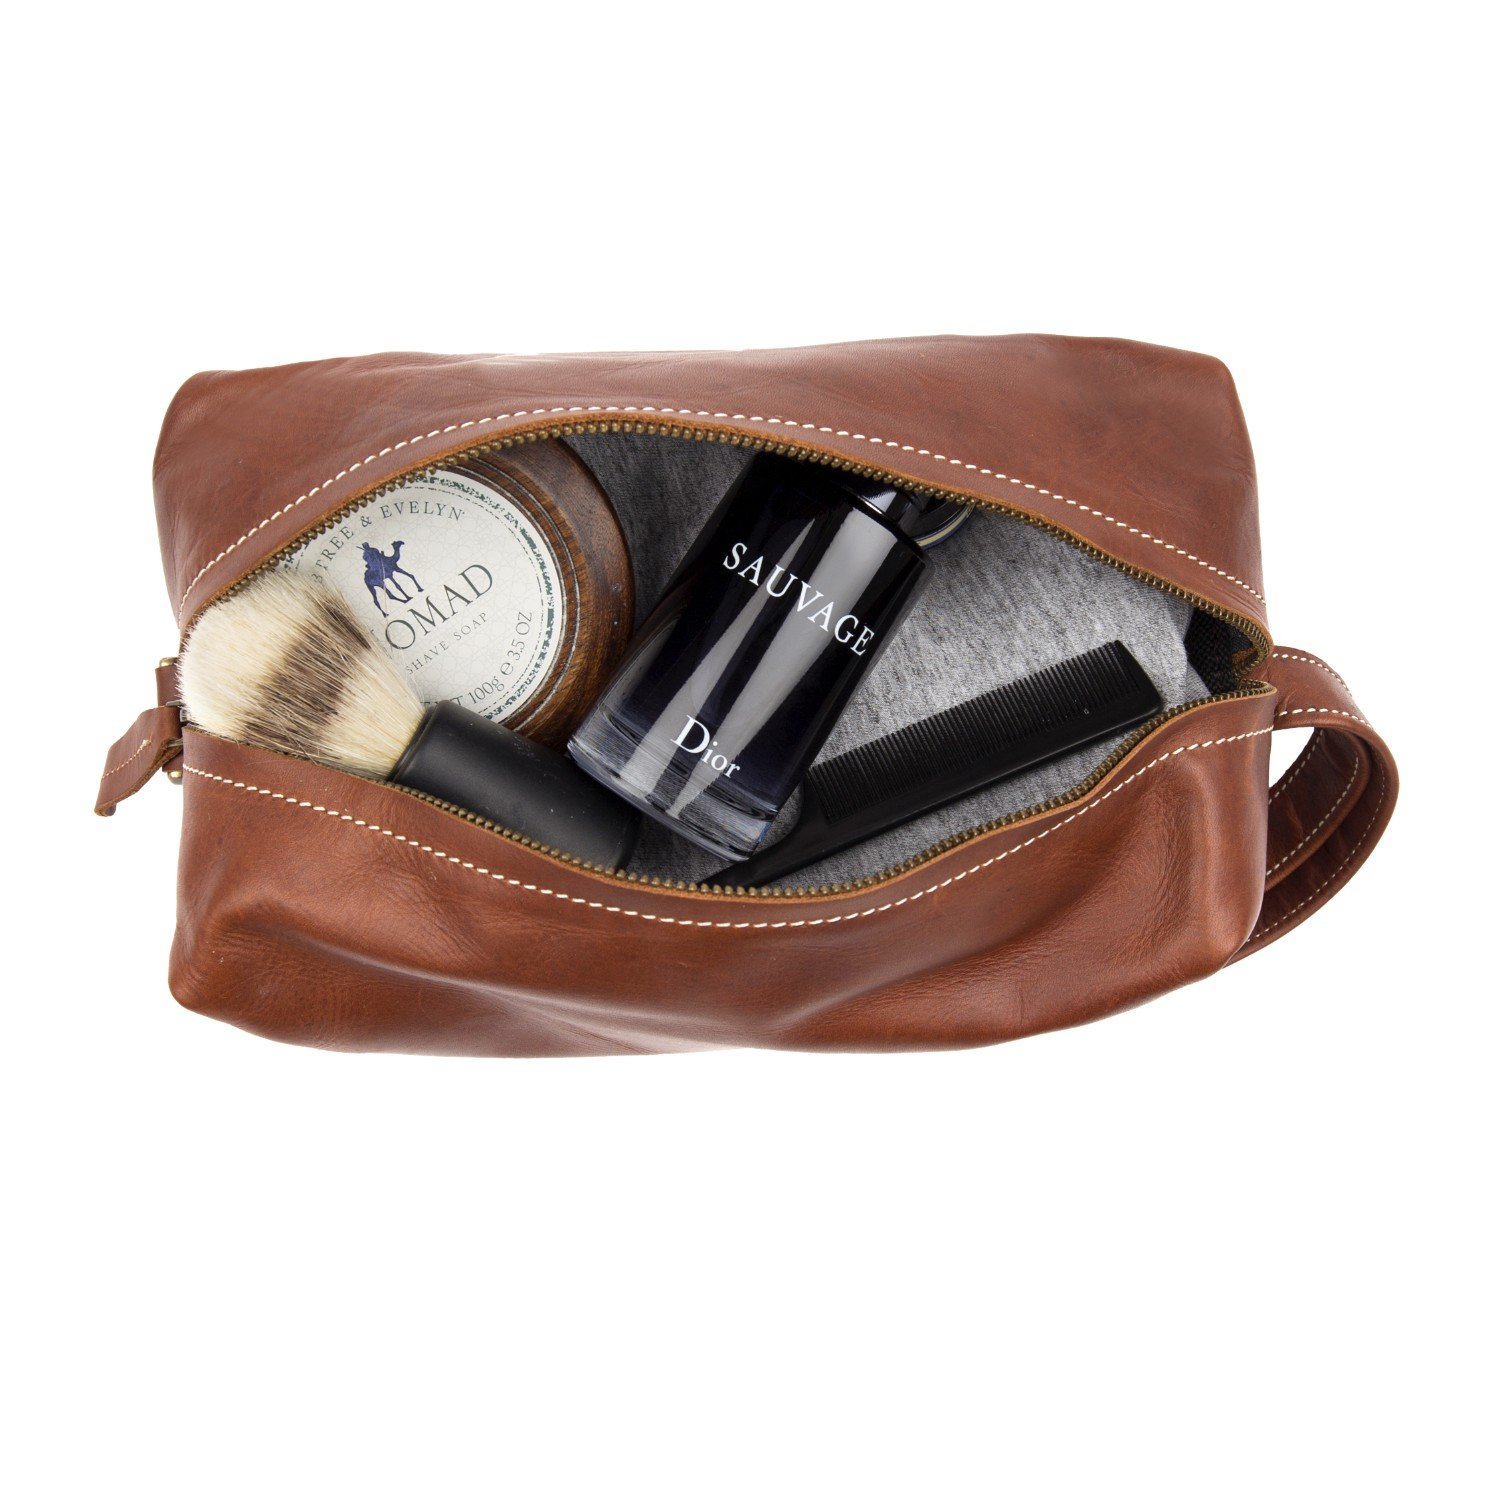 Personalised Leather Wash Bag or Dopp Kit from MAHI Leather | MAHI ...